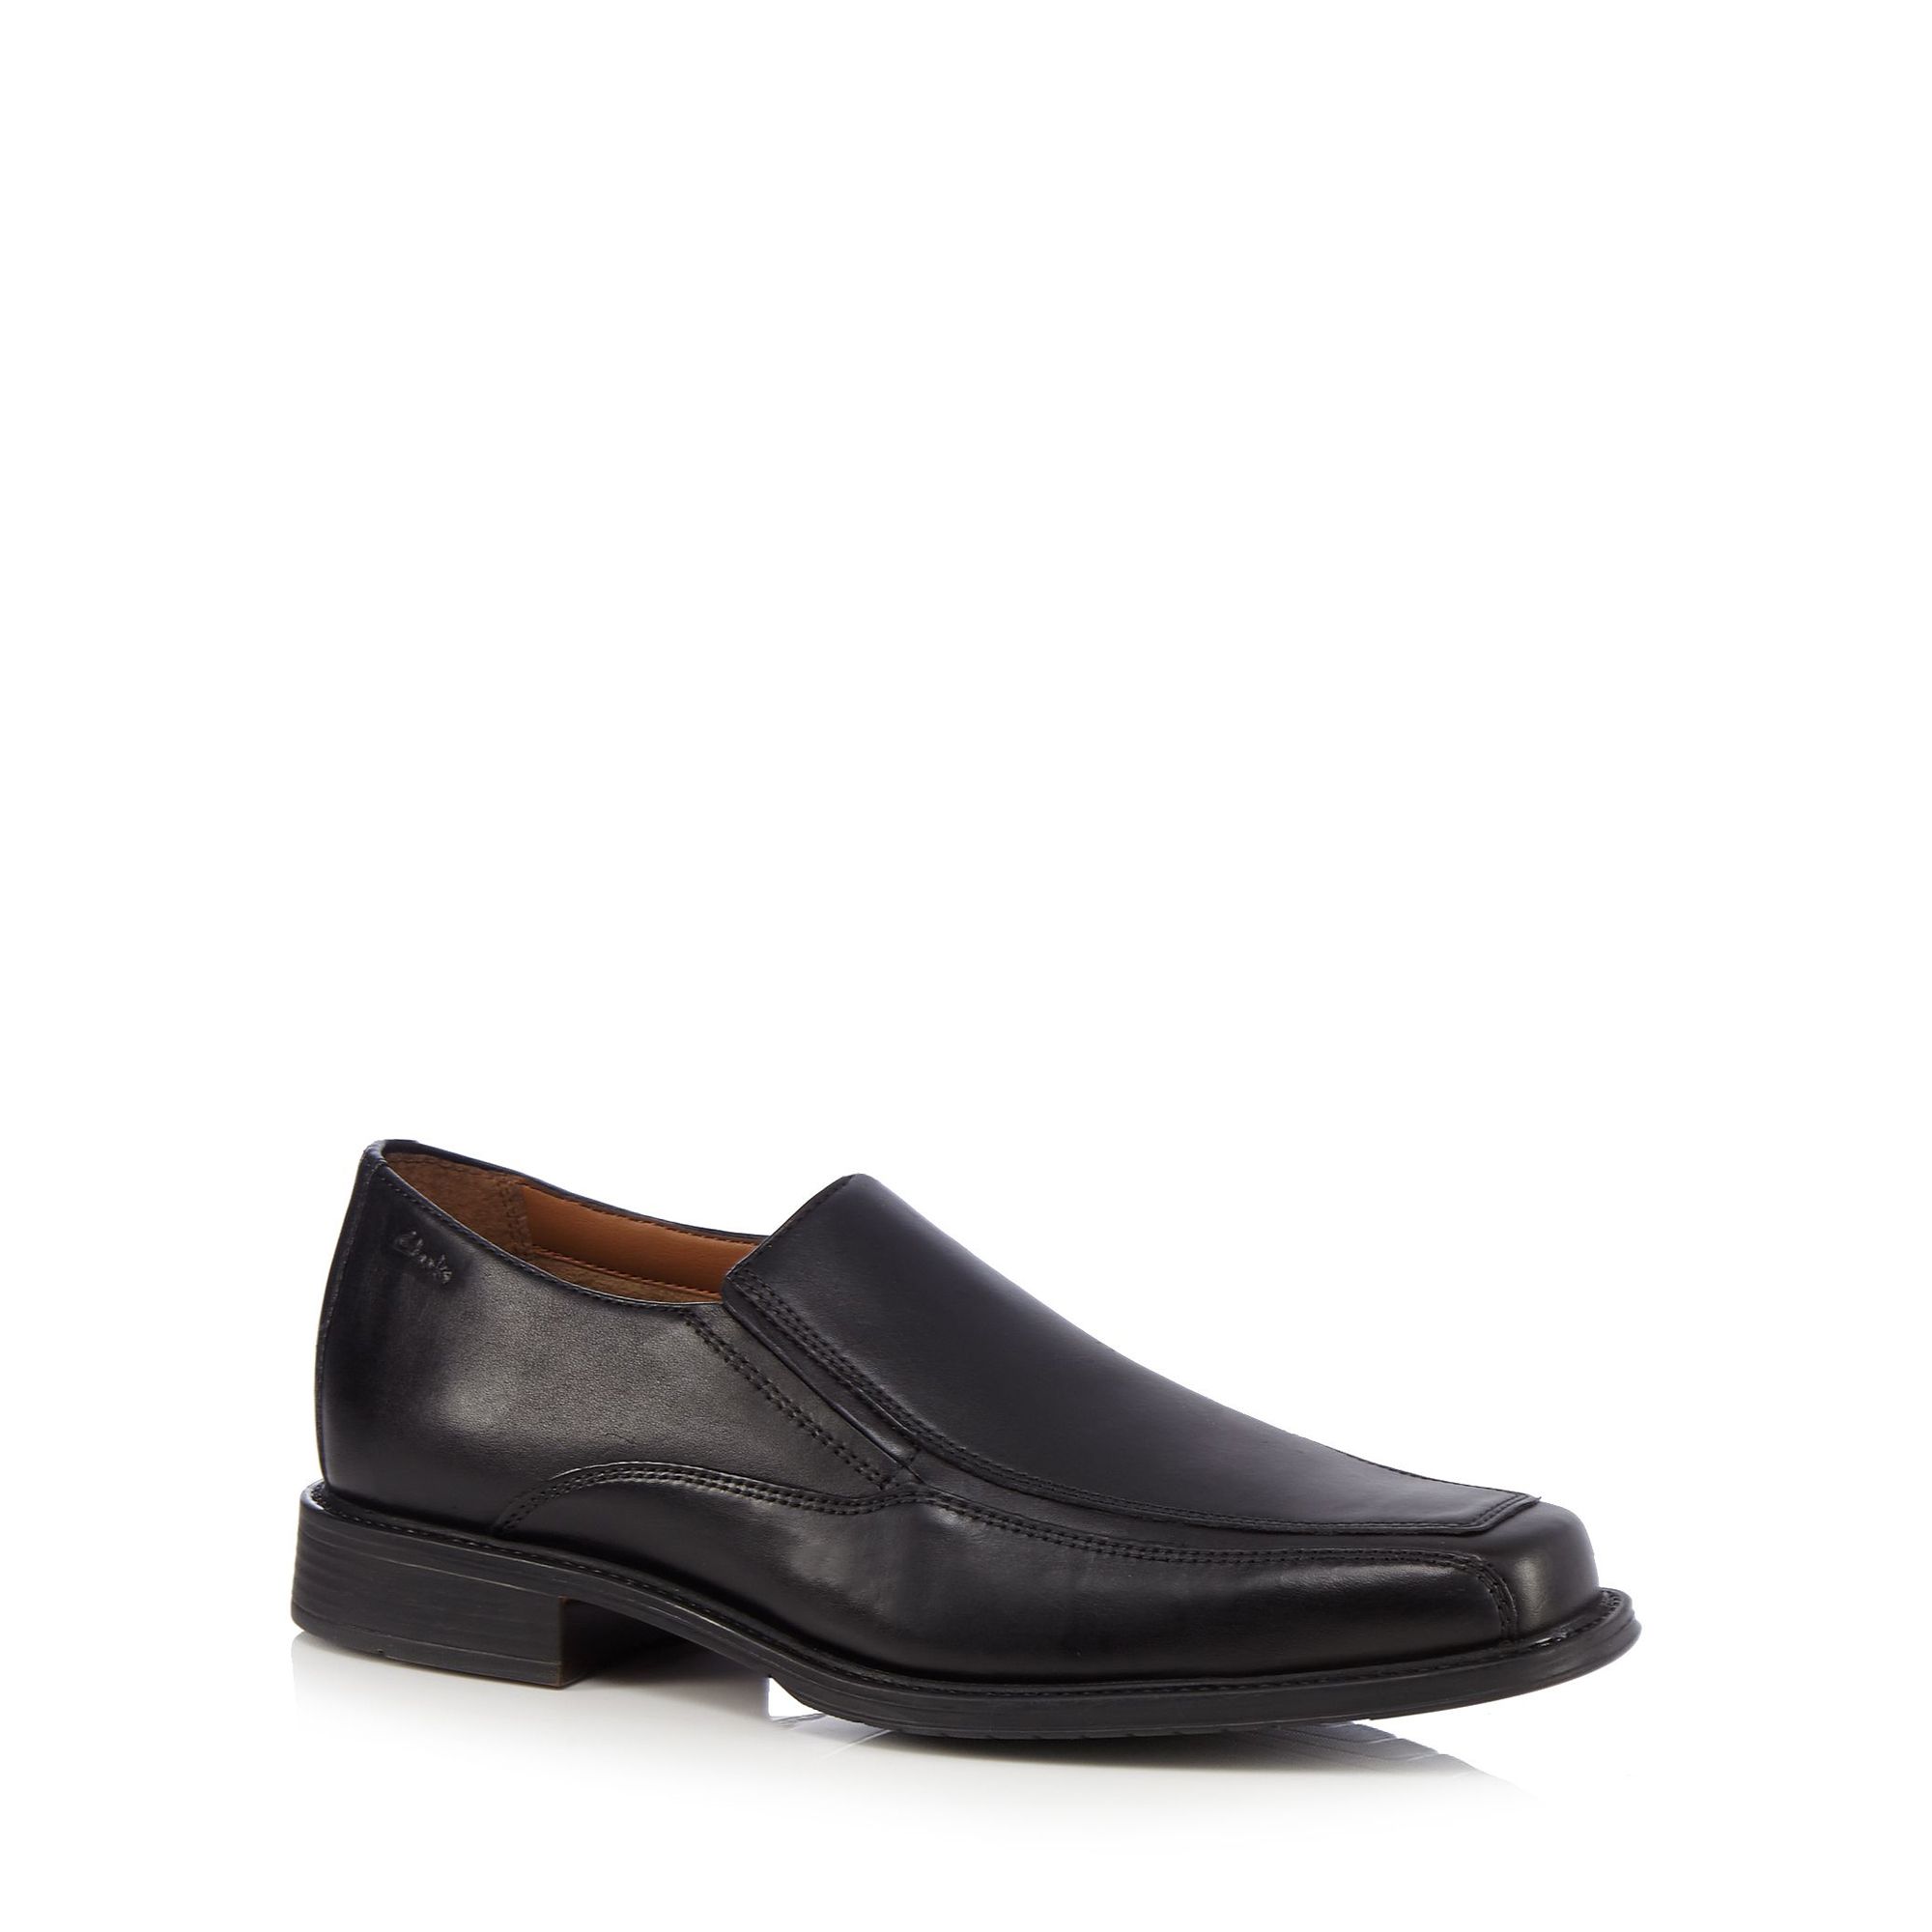 Clarks Mens Black 'Driggs Free' Slip-On Shoes From Debenhams | eBay